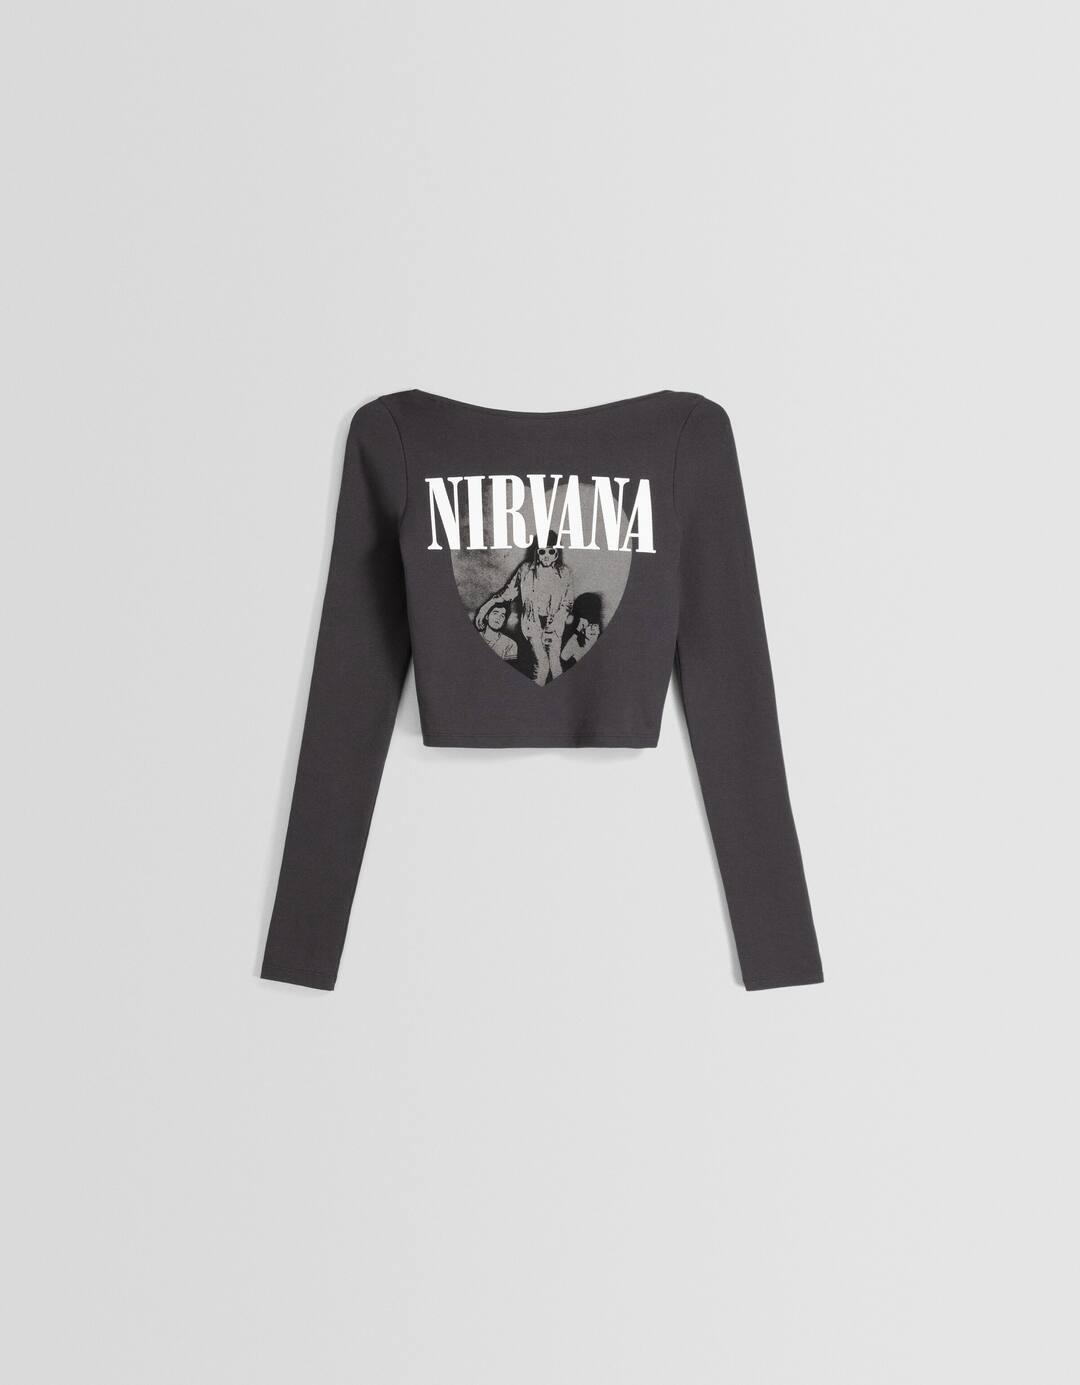 Camiseta Nirvana manga larga espalda descubierta print